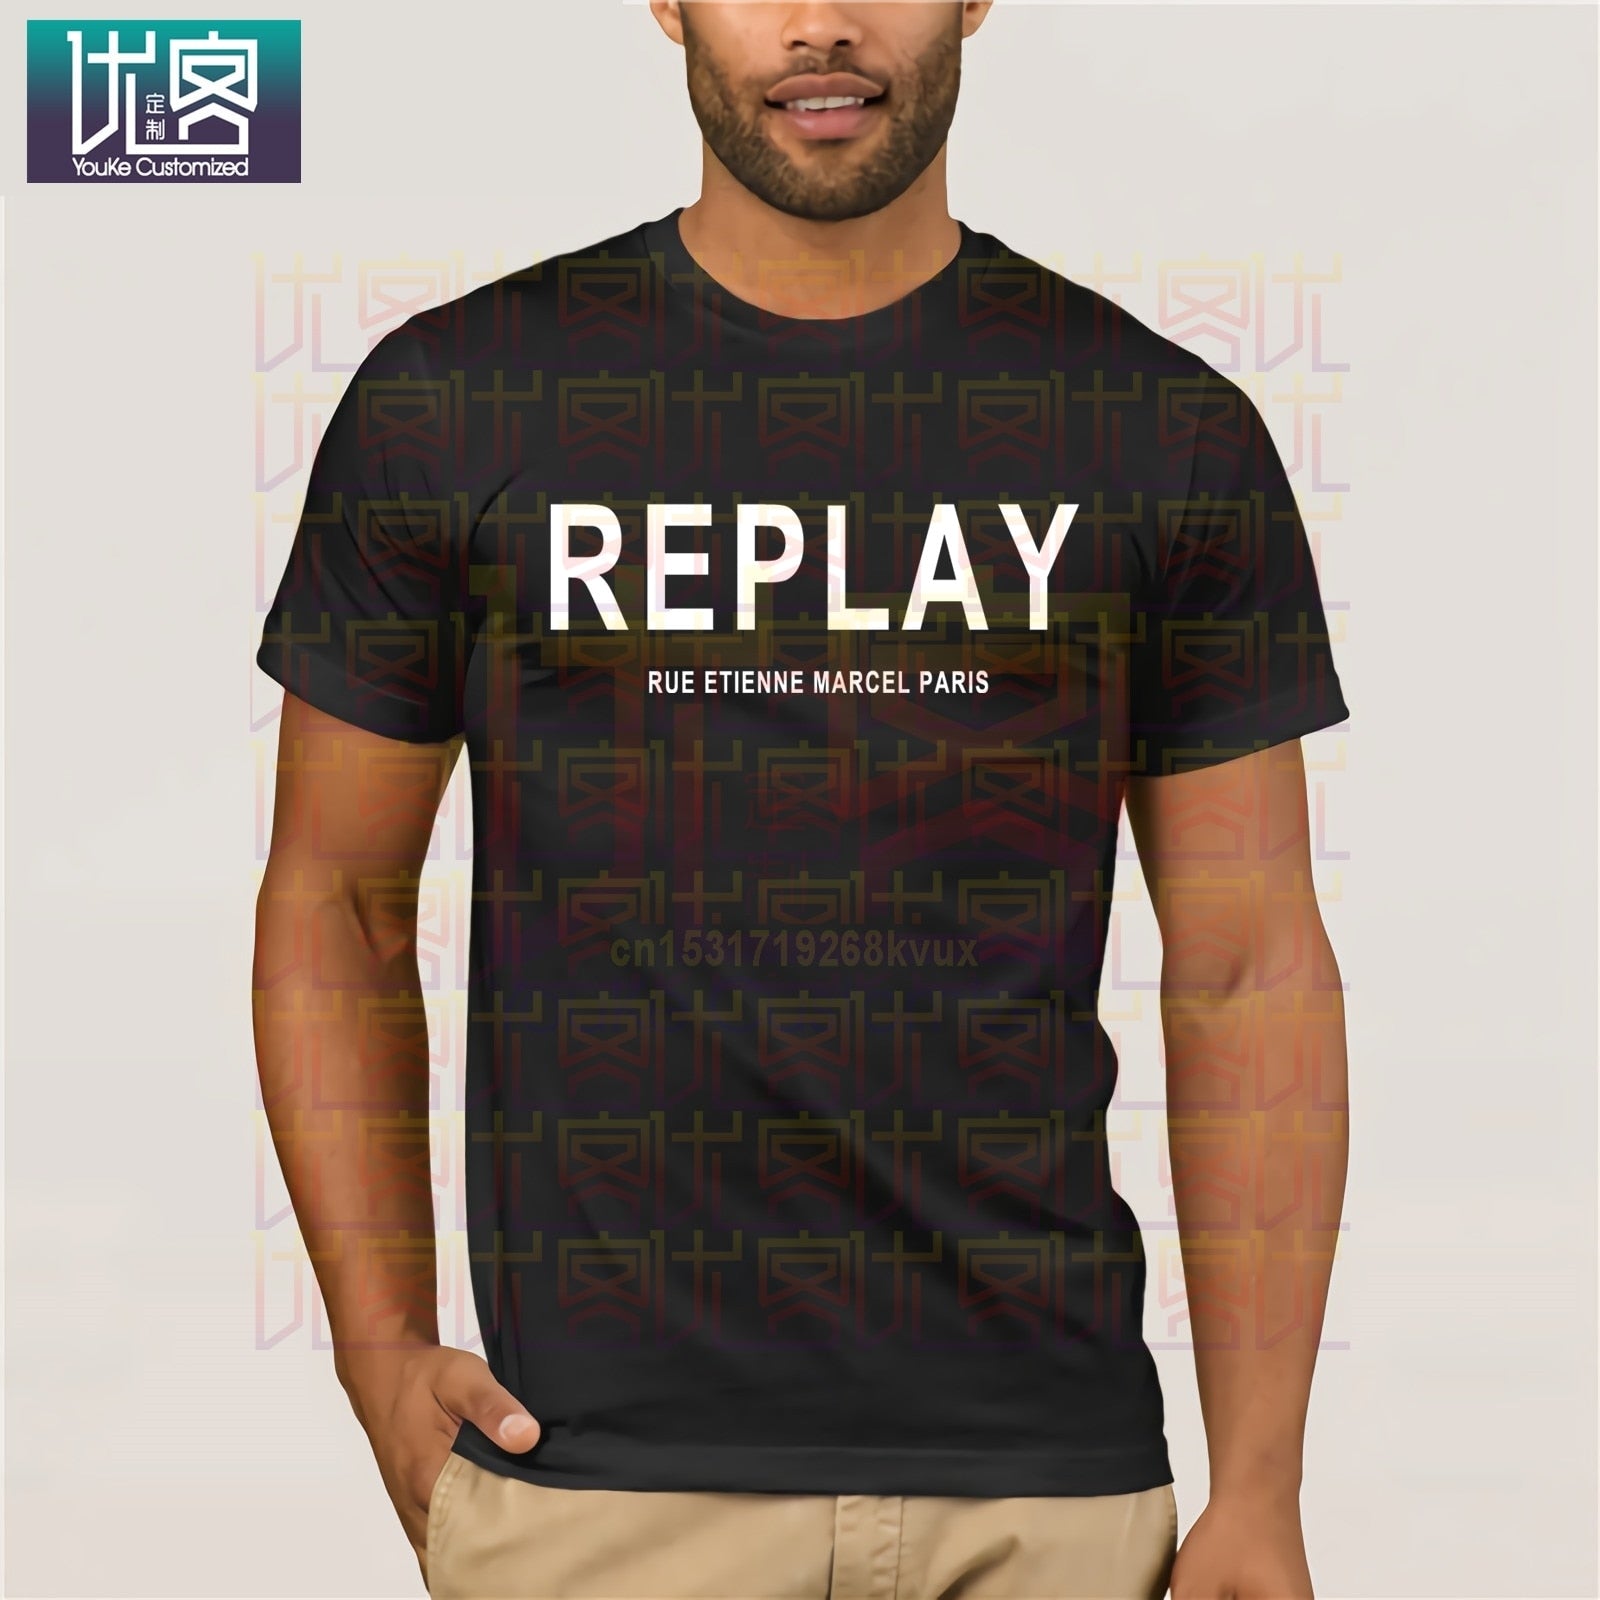 Men's T-shirts - Replay  Mens tshirts, T shirt, Shirts